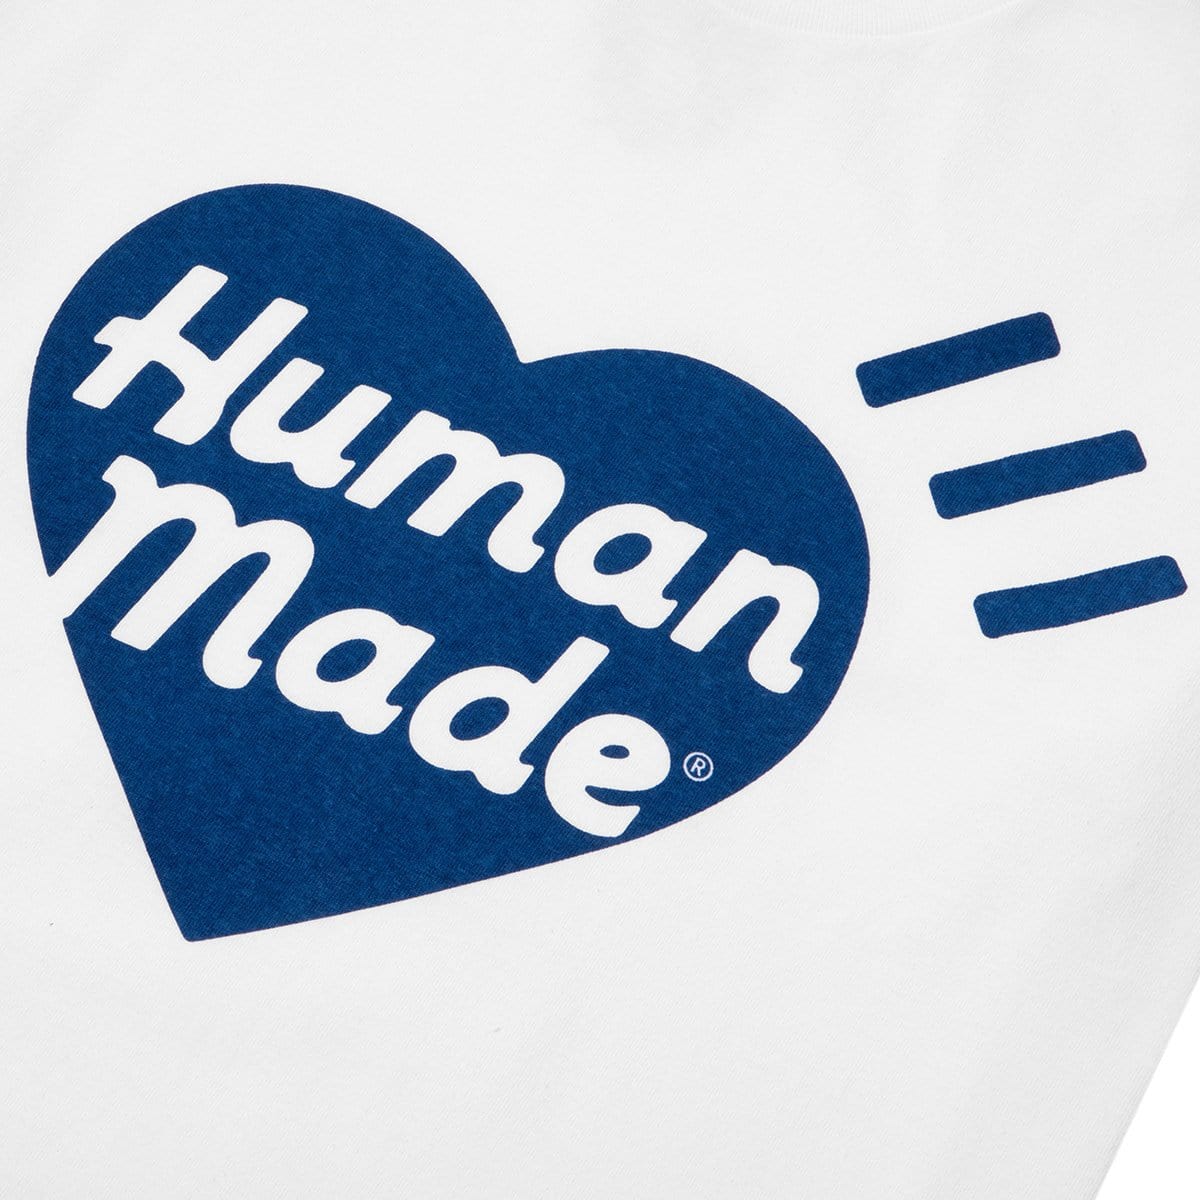 Human Made T-Shirts T-SHIRT #1920